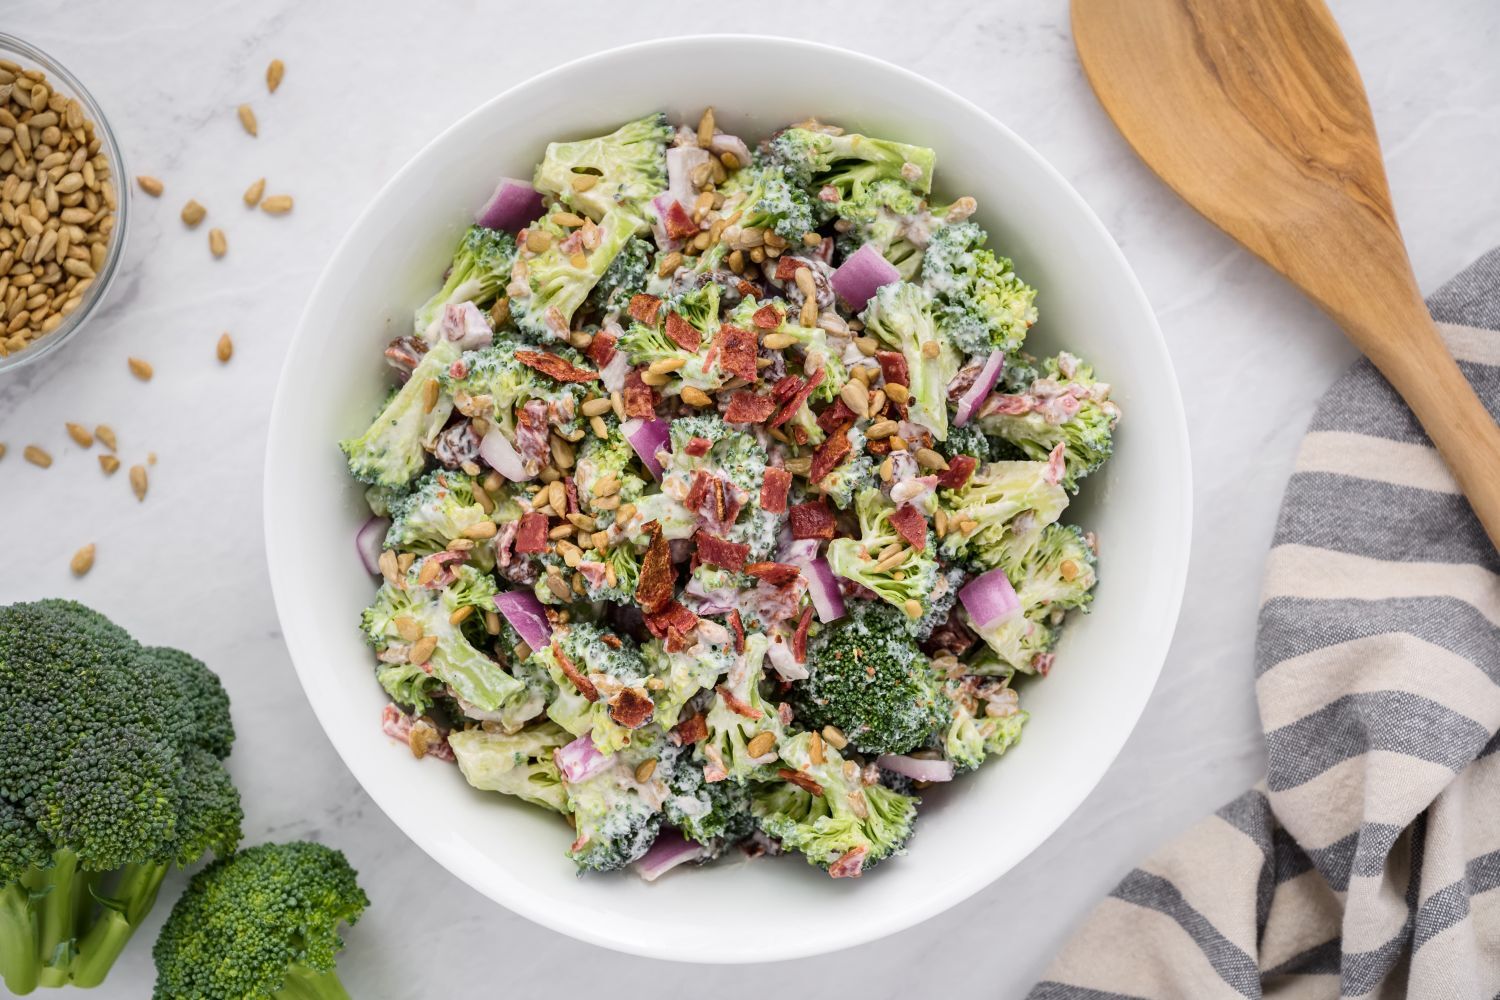 Fresh broccoli salad made with fresh broccoli florets, red onion, raisins, sunflower seeds, and bacon in a creamy yogurt dressing.